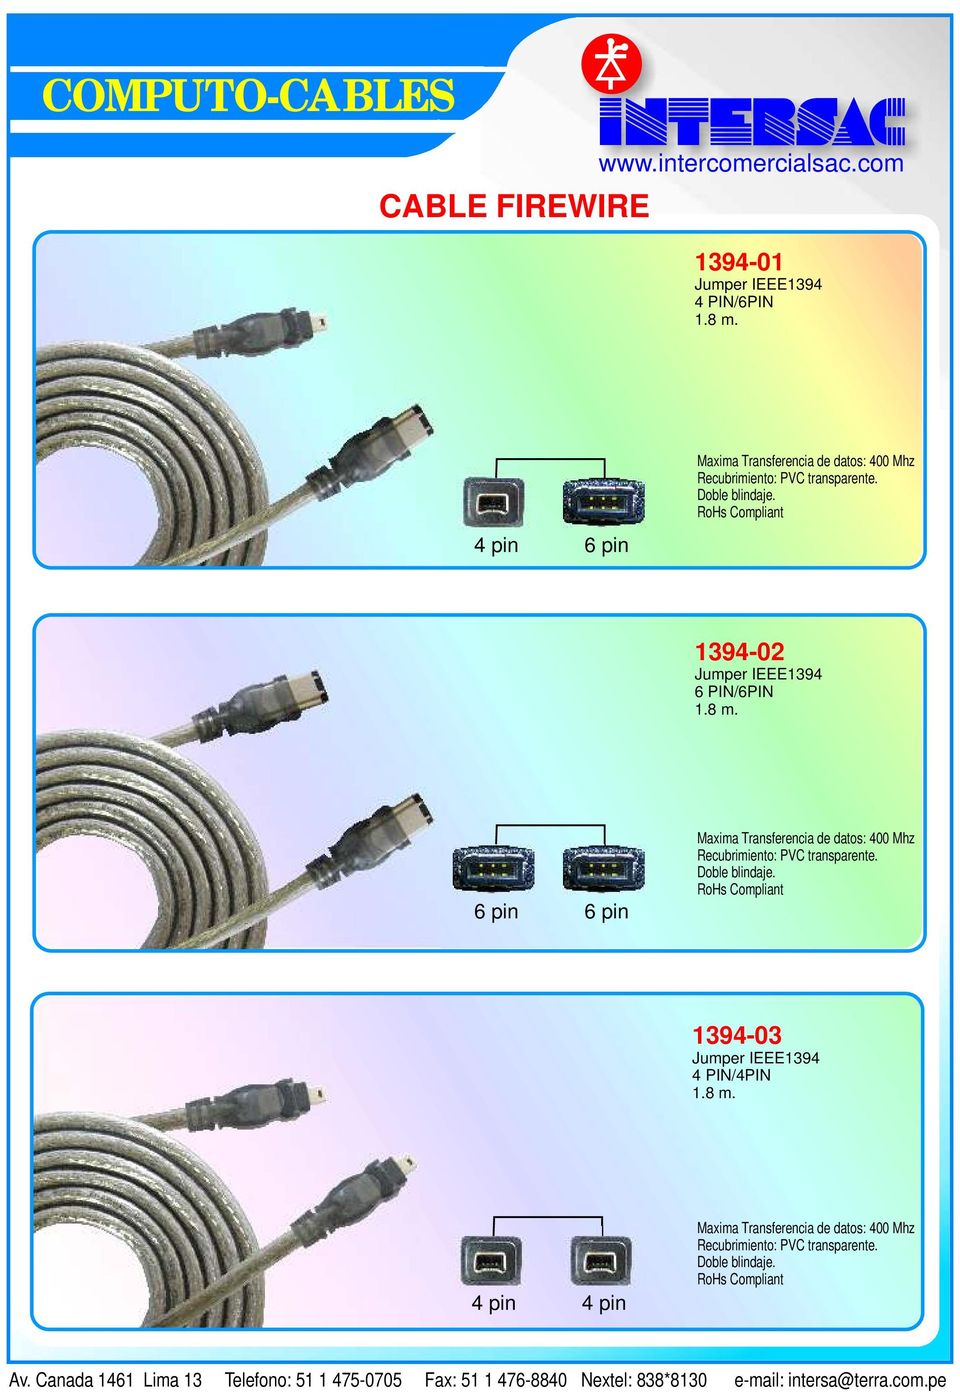 RoHs Compliant 1394-02 Jumper IEEE1394 6 PIN/6PIN 1.8 m.